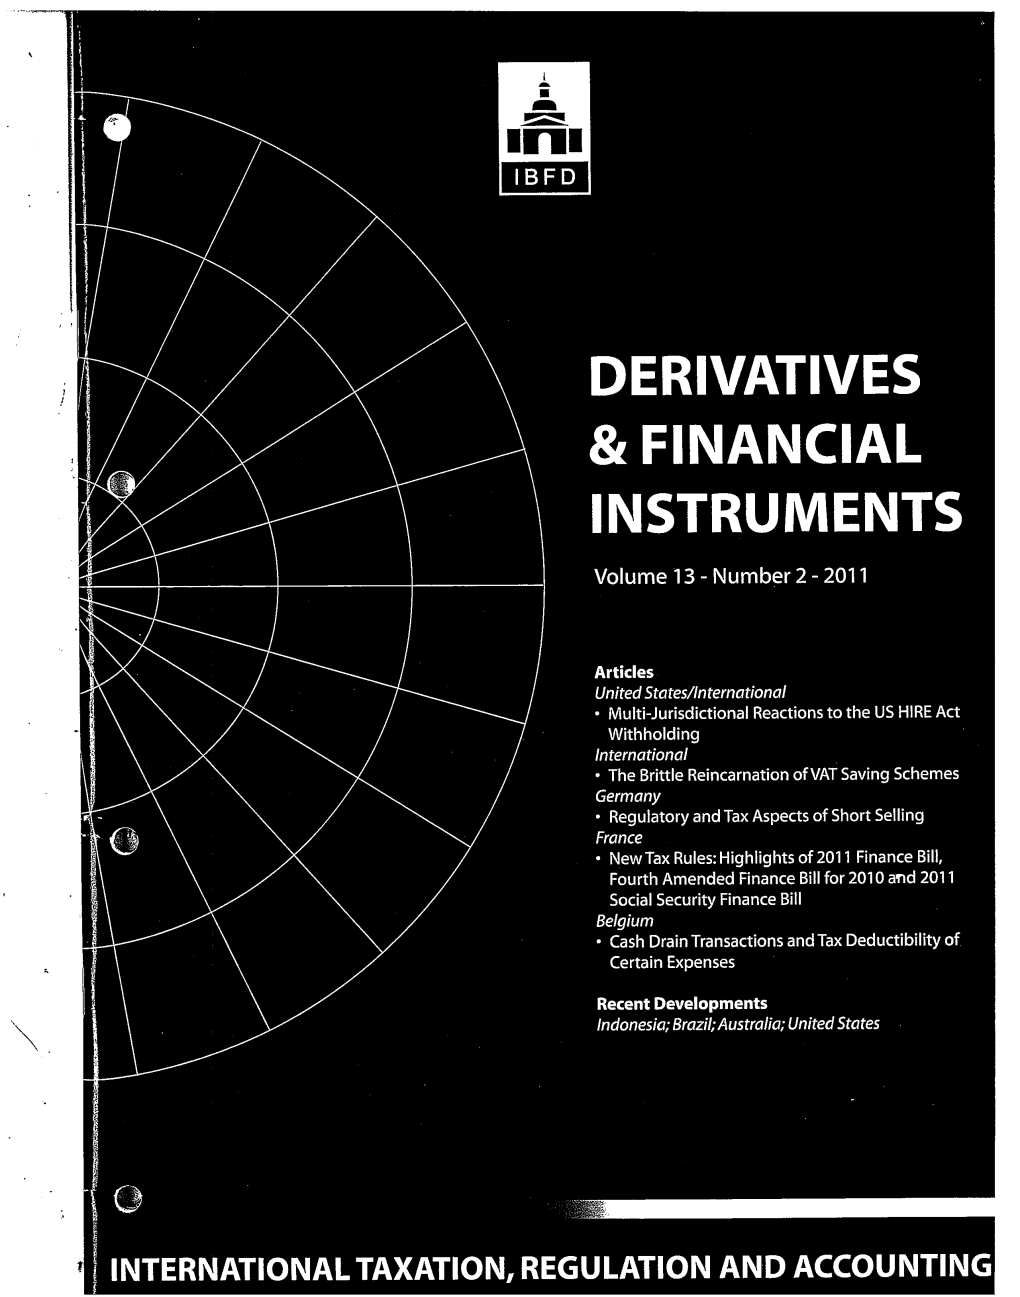 Derivatives & Financial Instruments